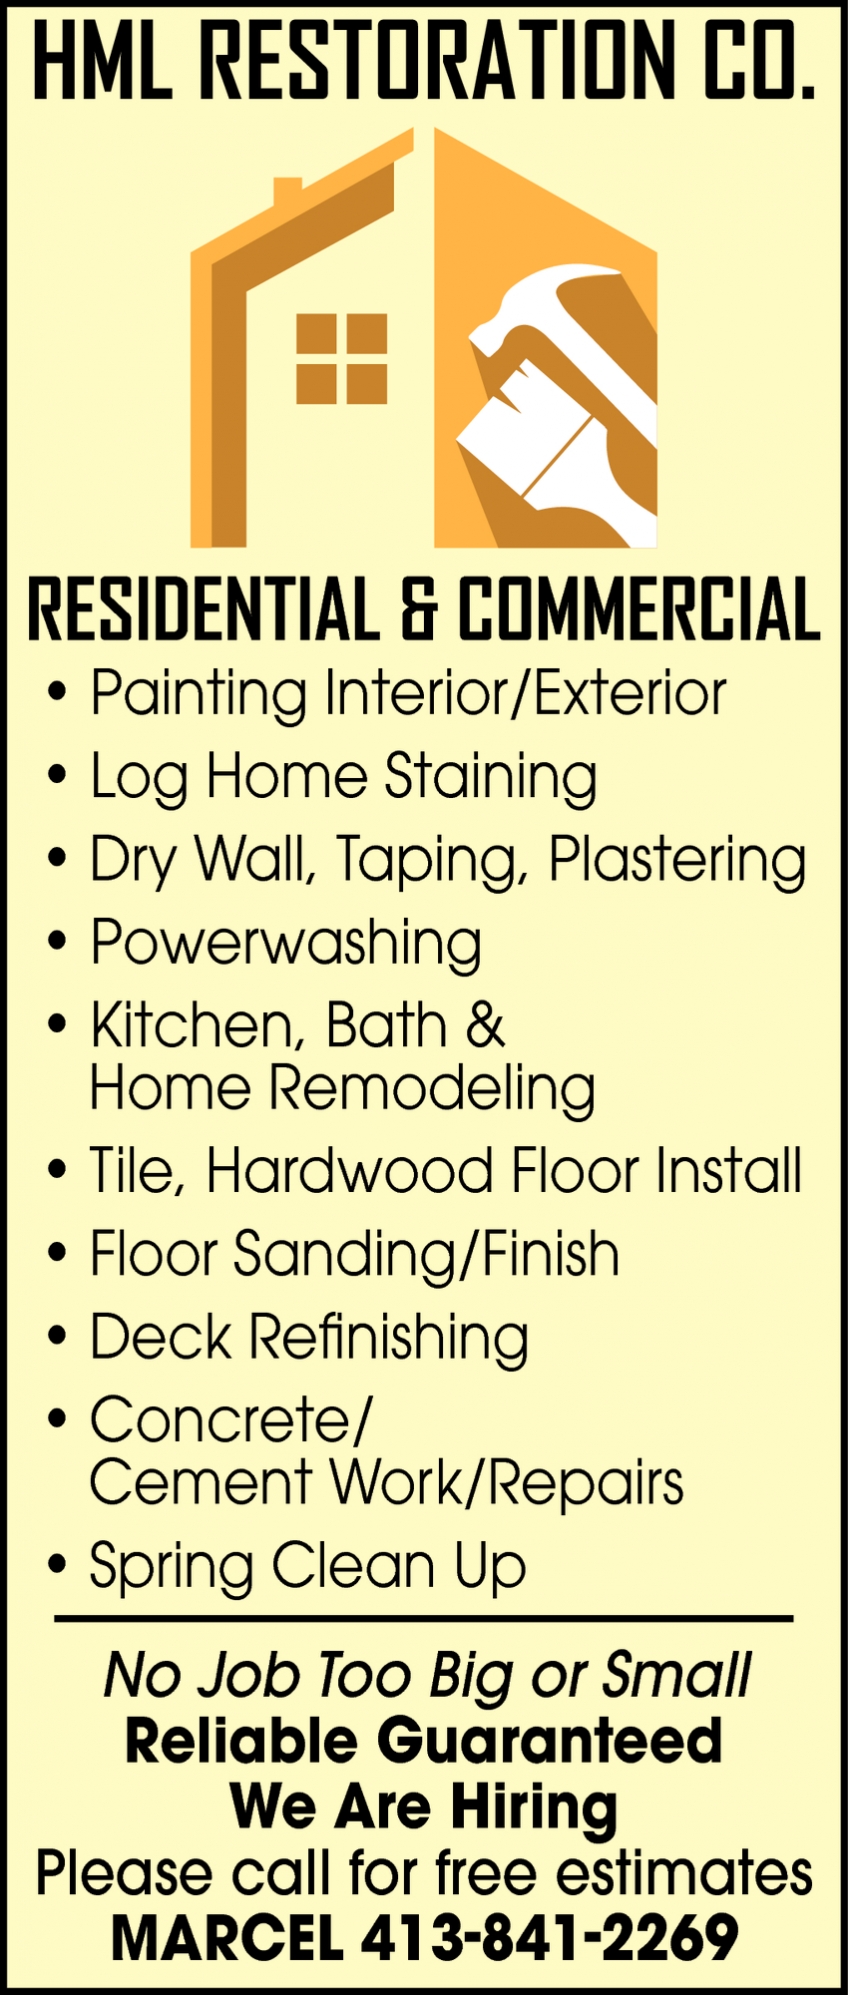 Residential & Commercial Restoration